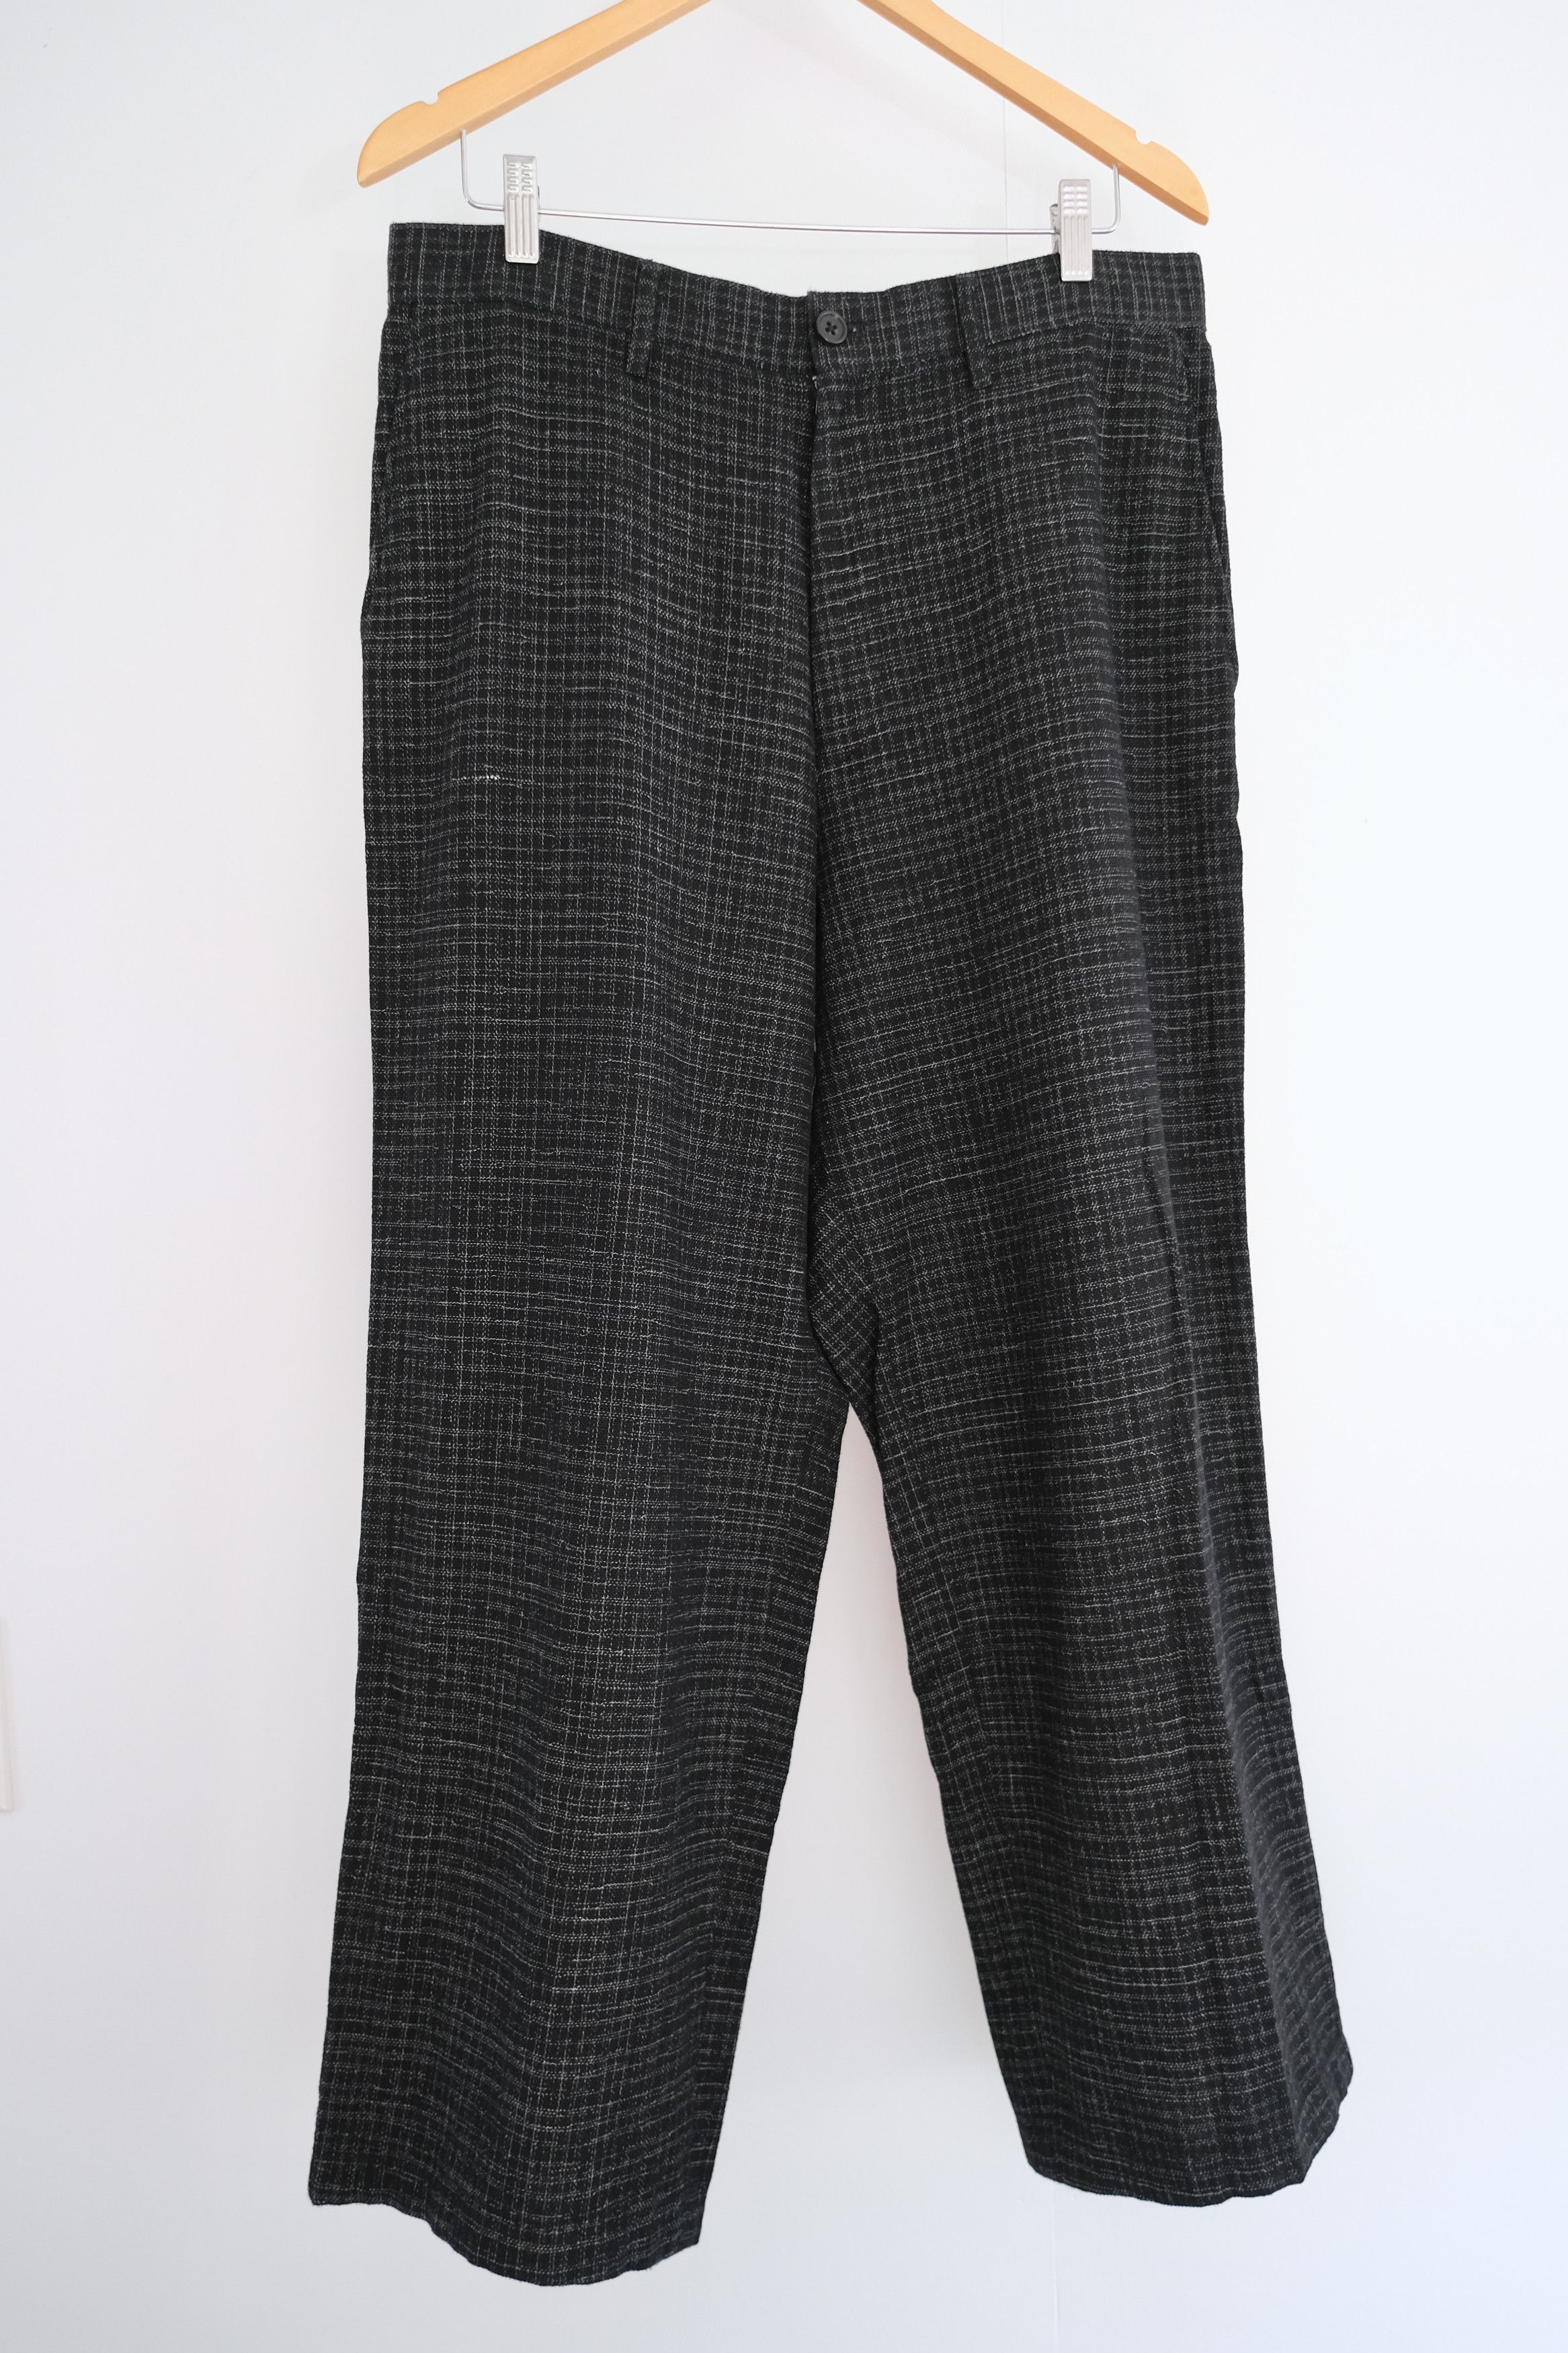 🎐 YFM [1990s] Wide Grid-Weave Pants - 19